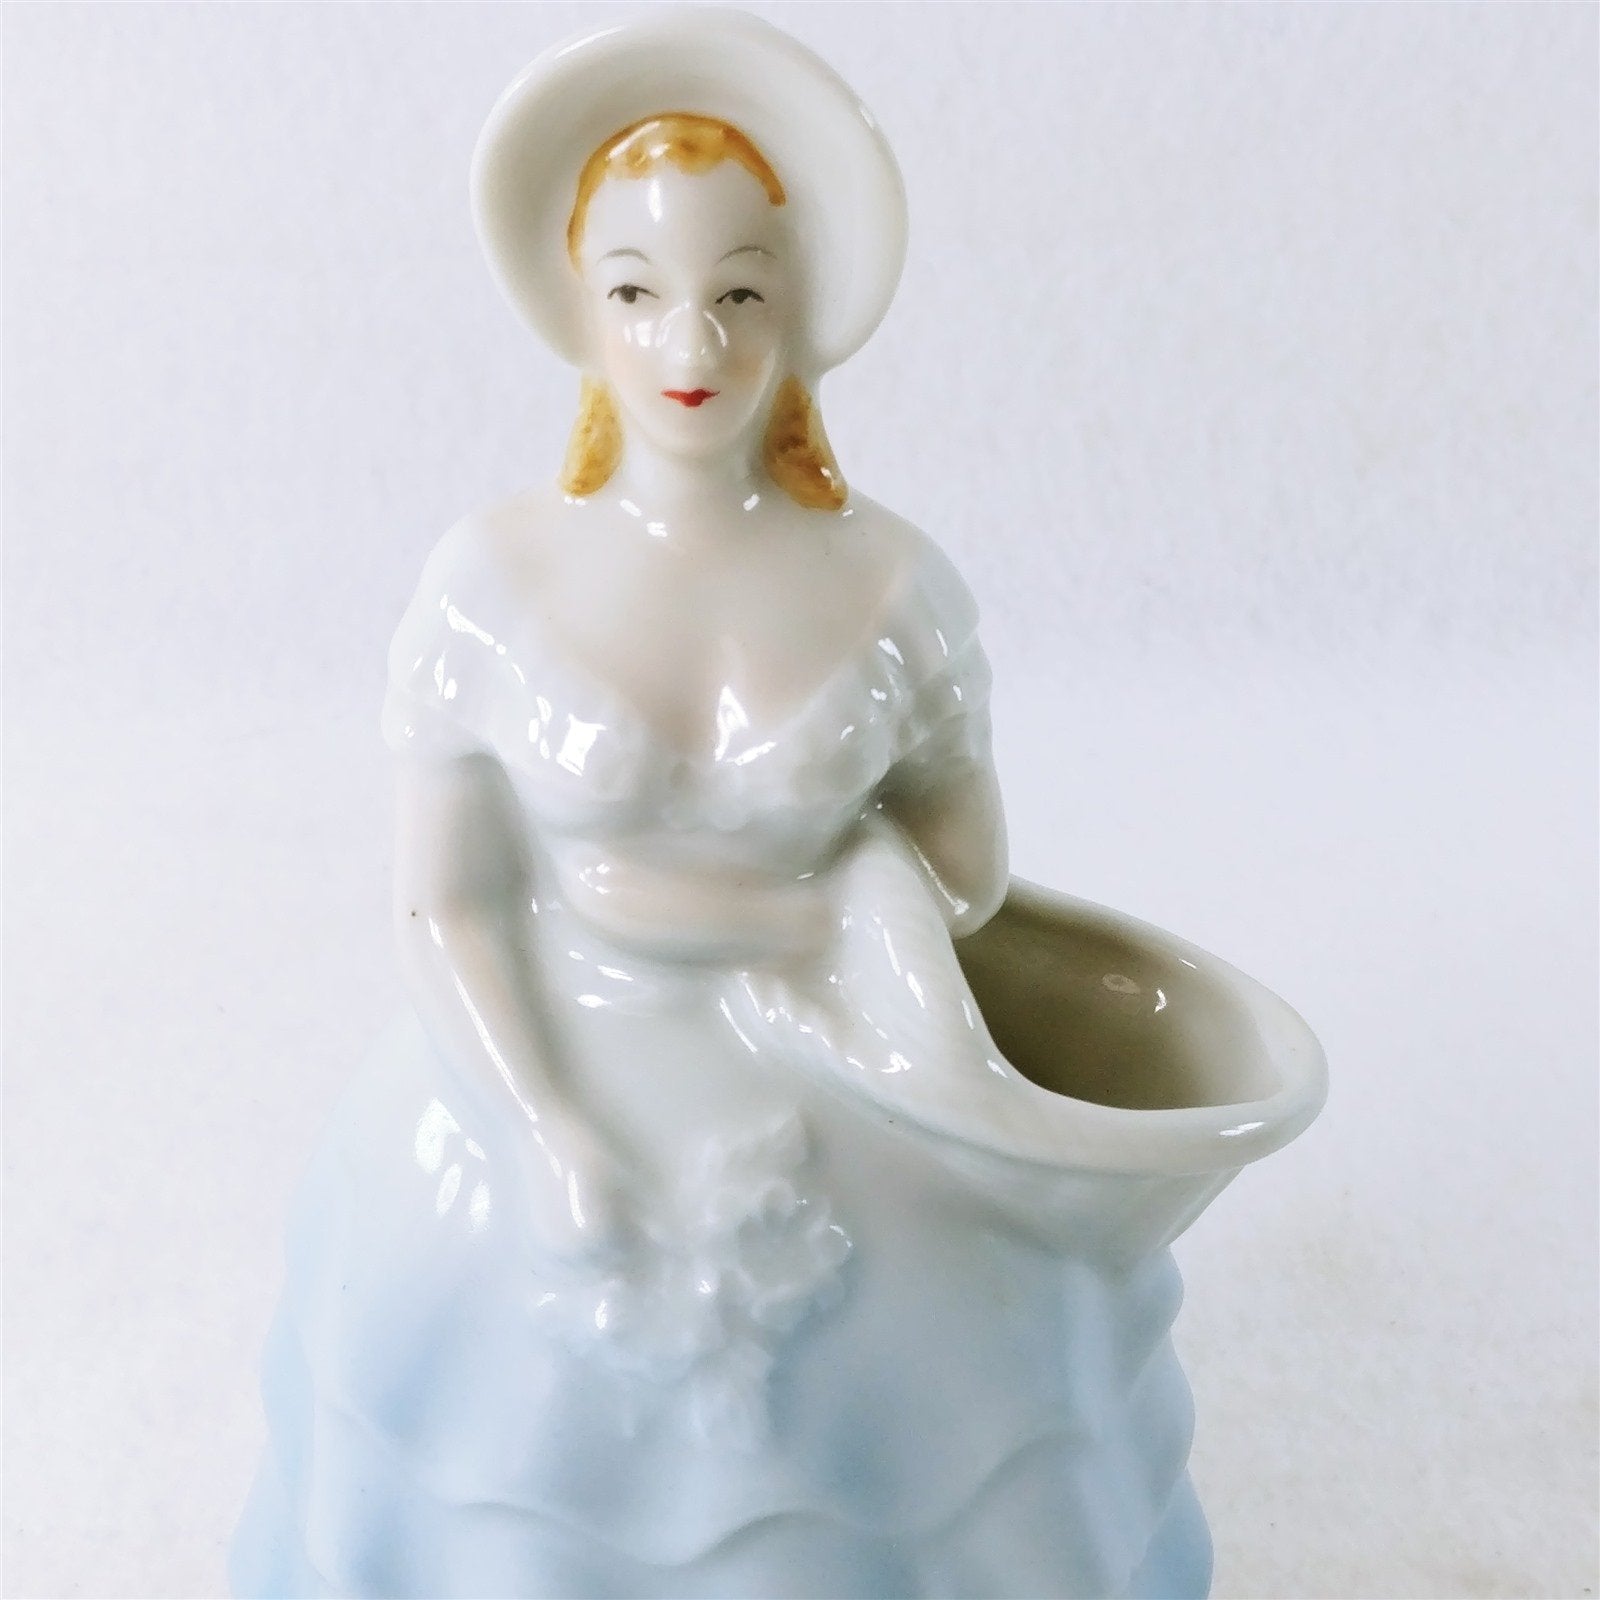 Planter Lady Female Figurine in Dress Hat Ceramic 7"